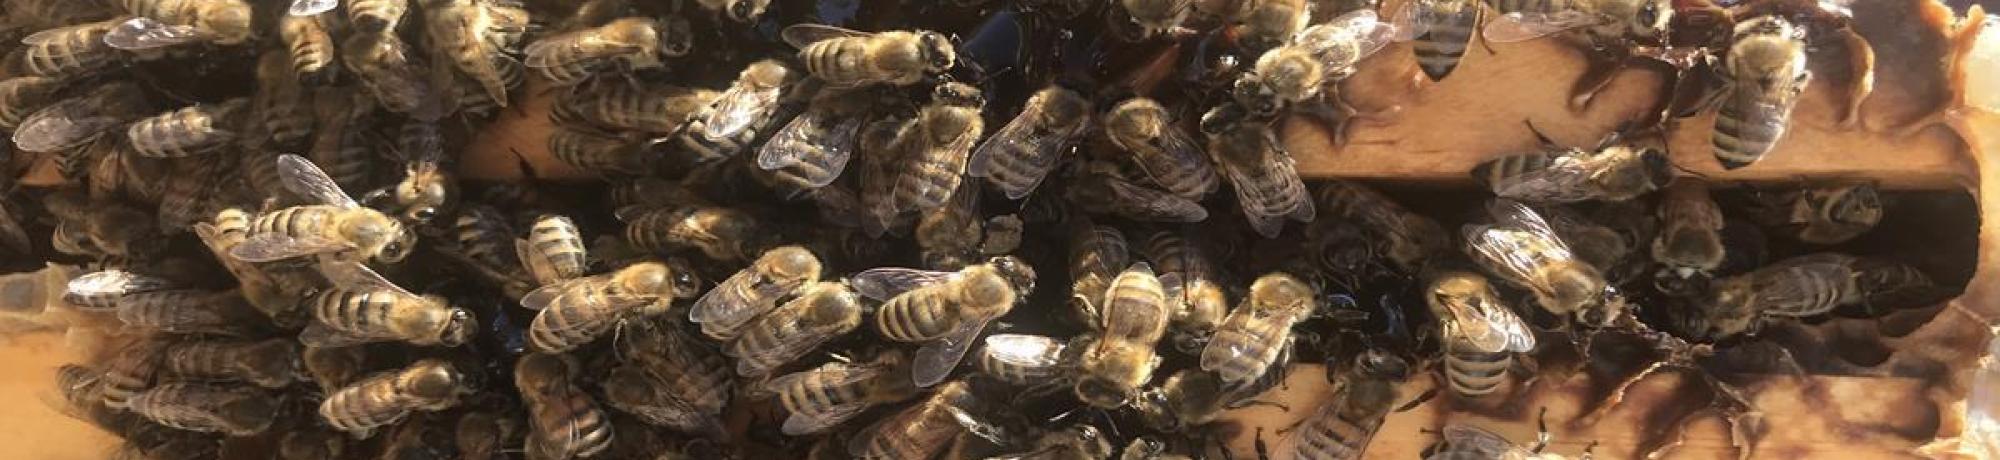 Honey bees on tops of frames